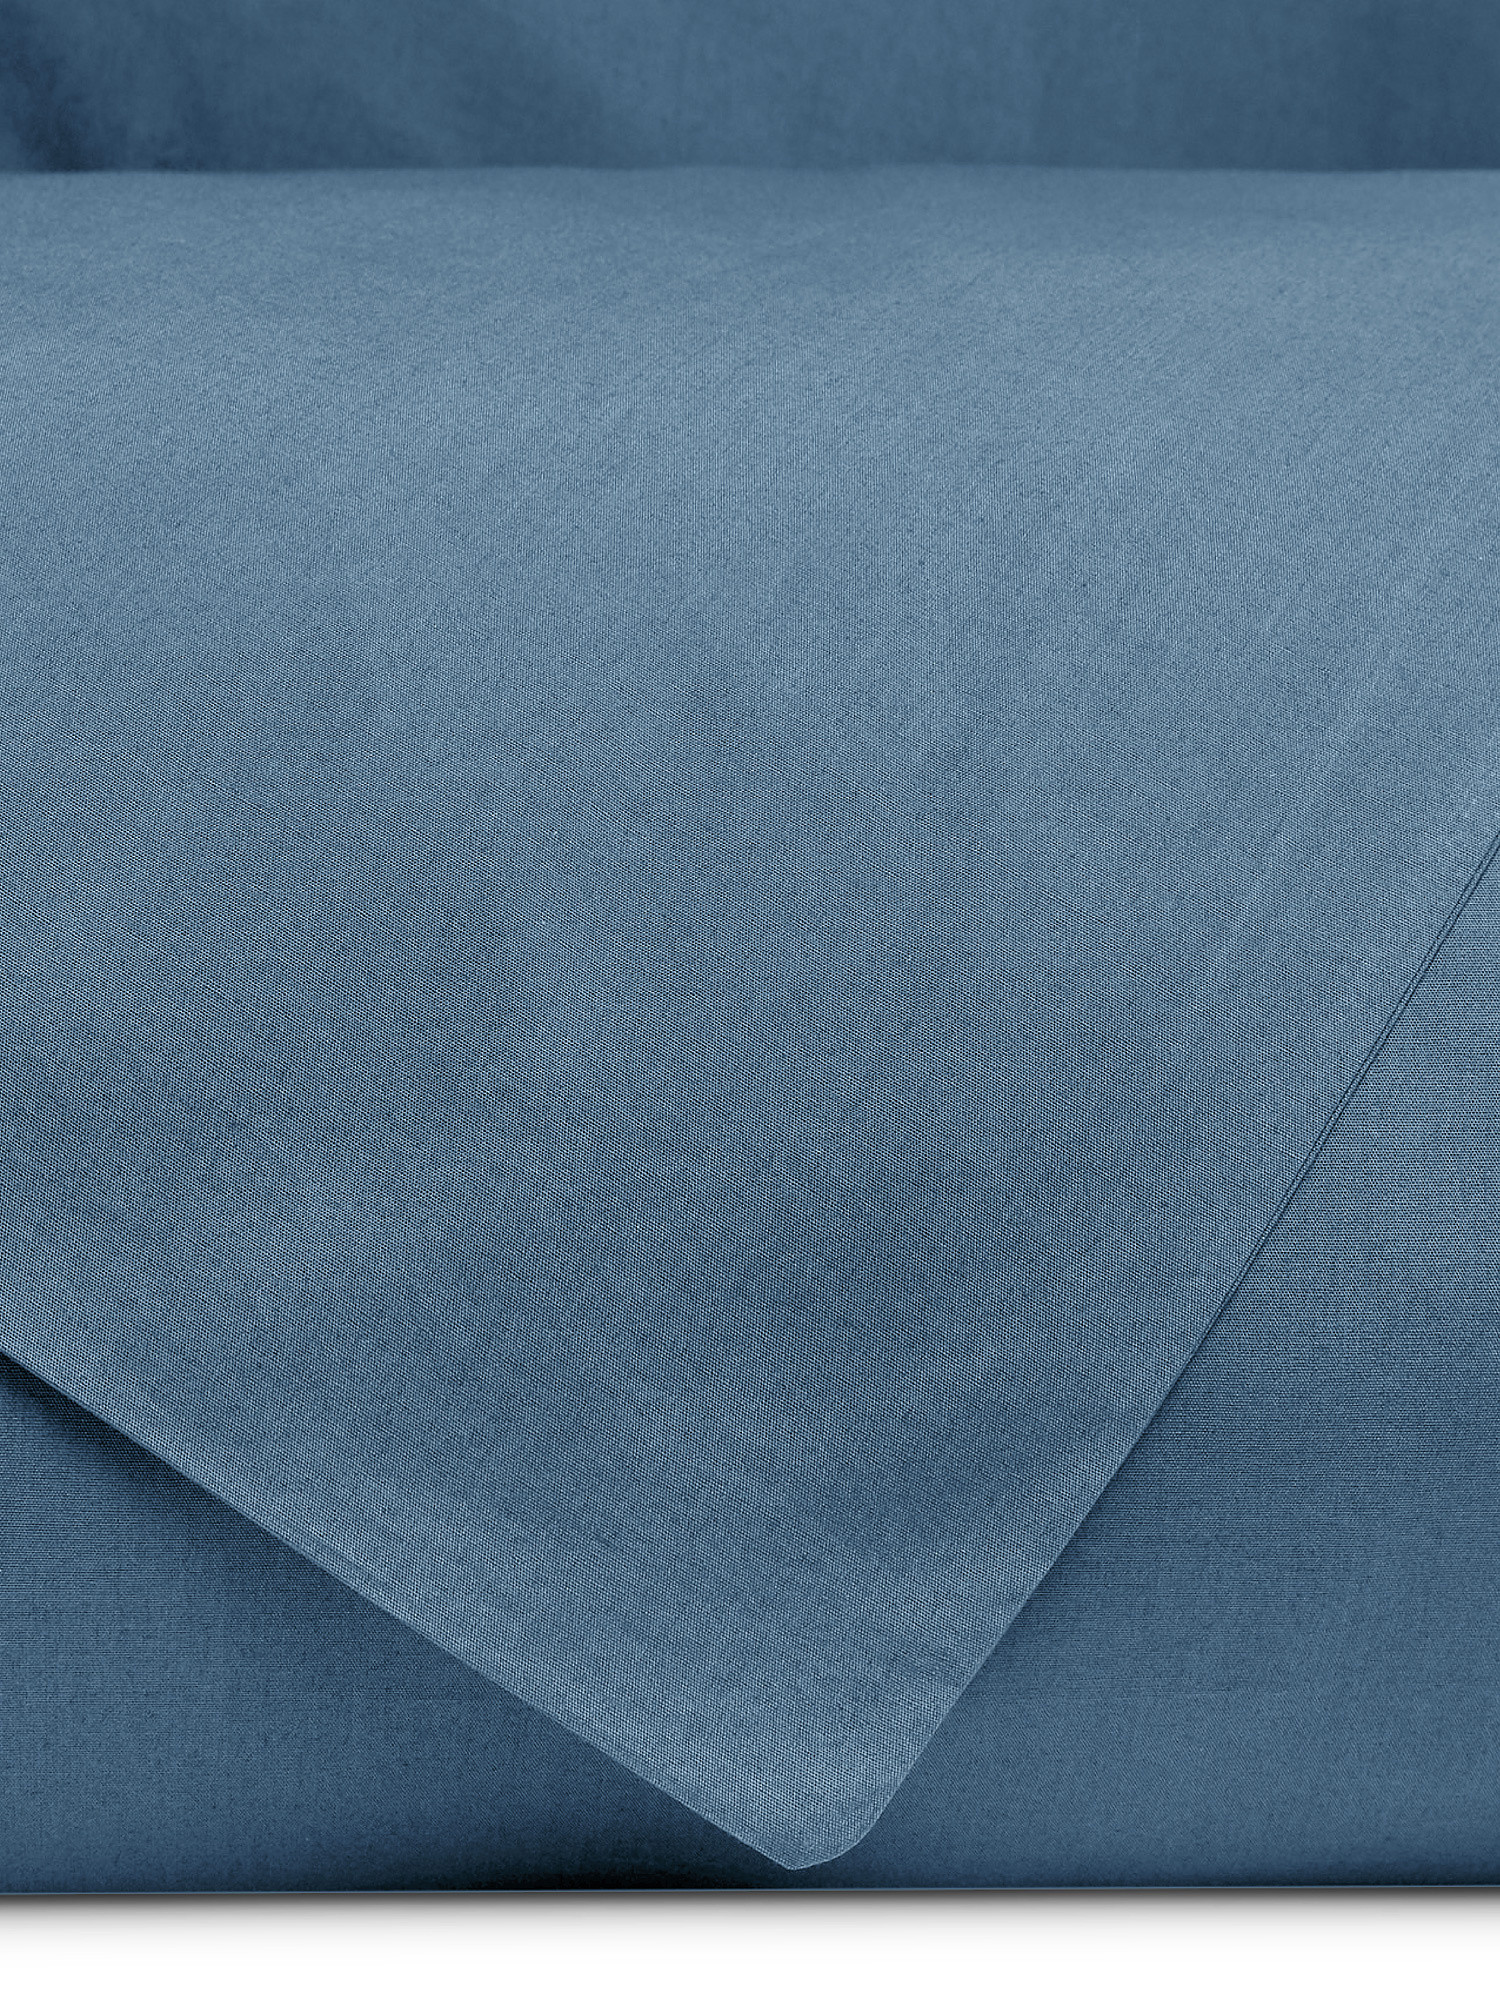 Parure copripiumino cotone percalle tinta unita, Blu, large image number 1